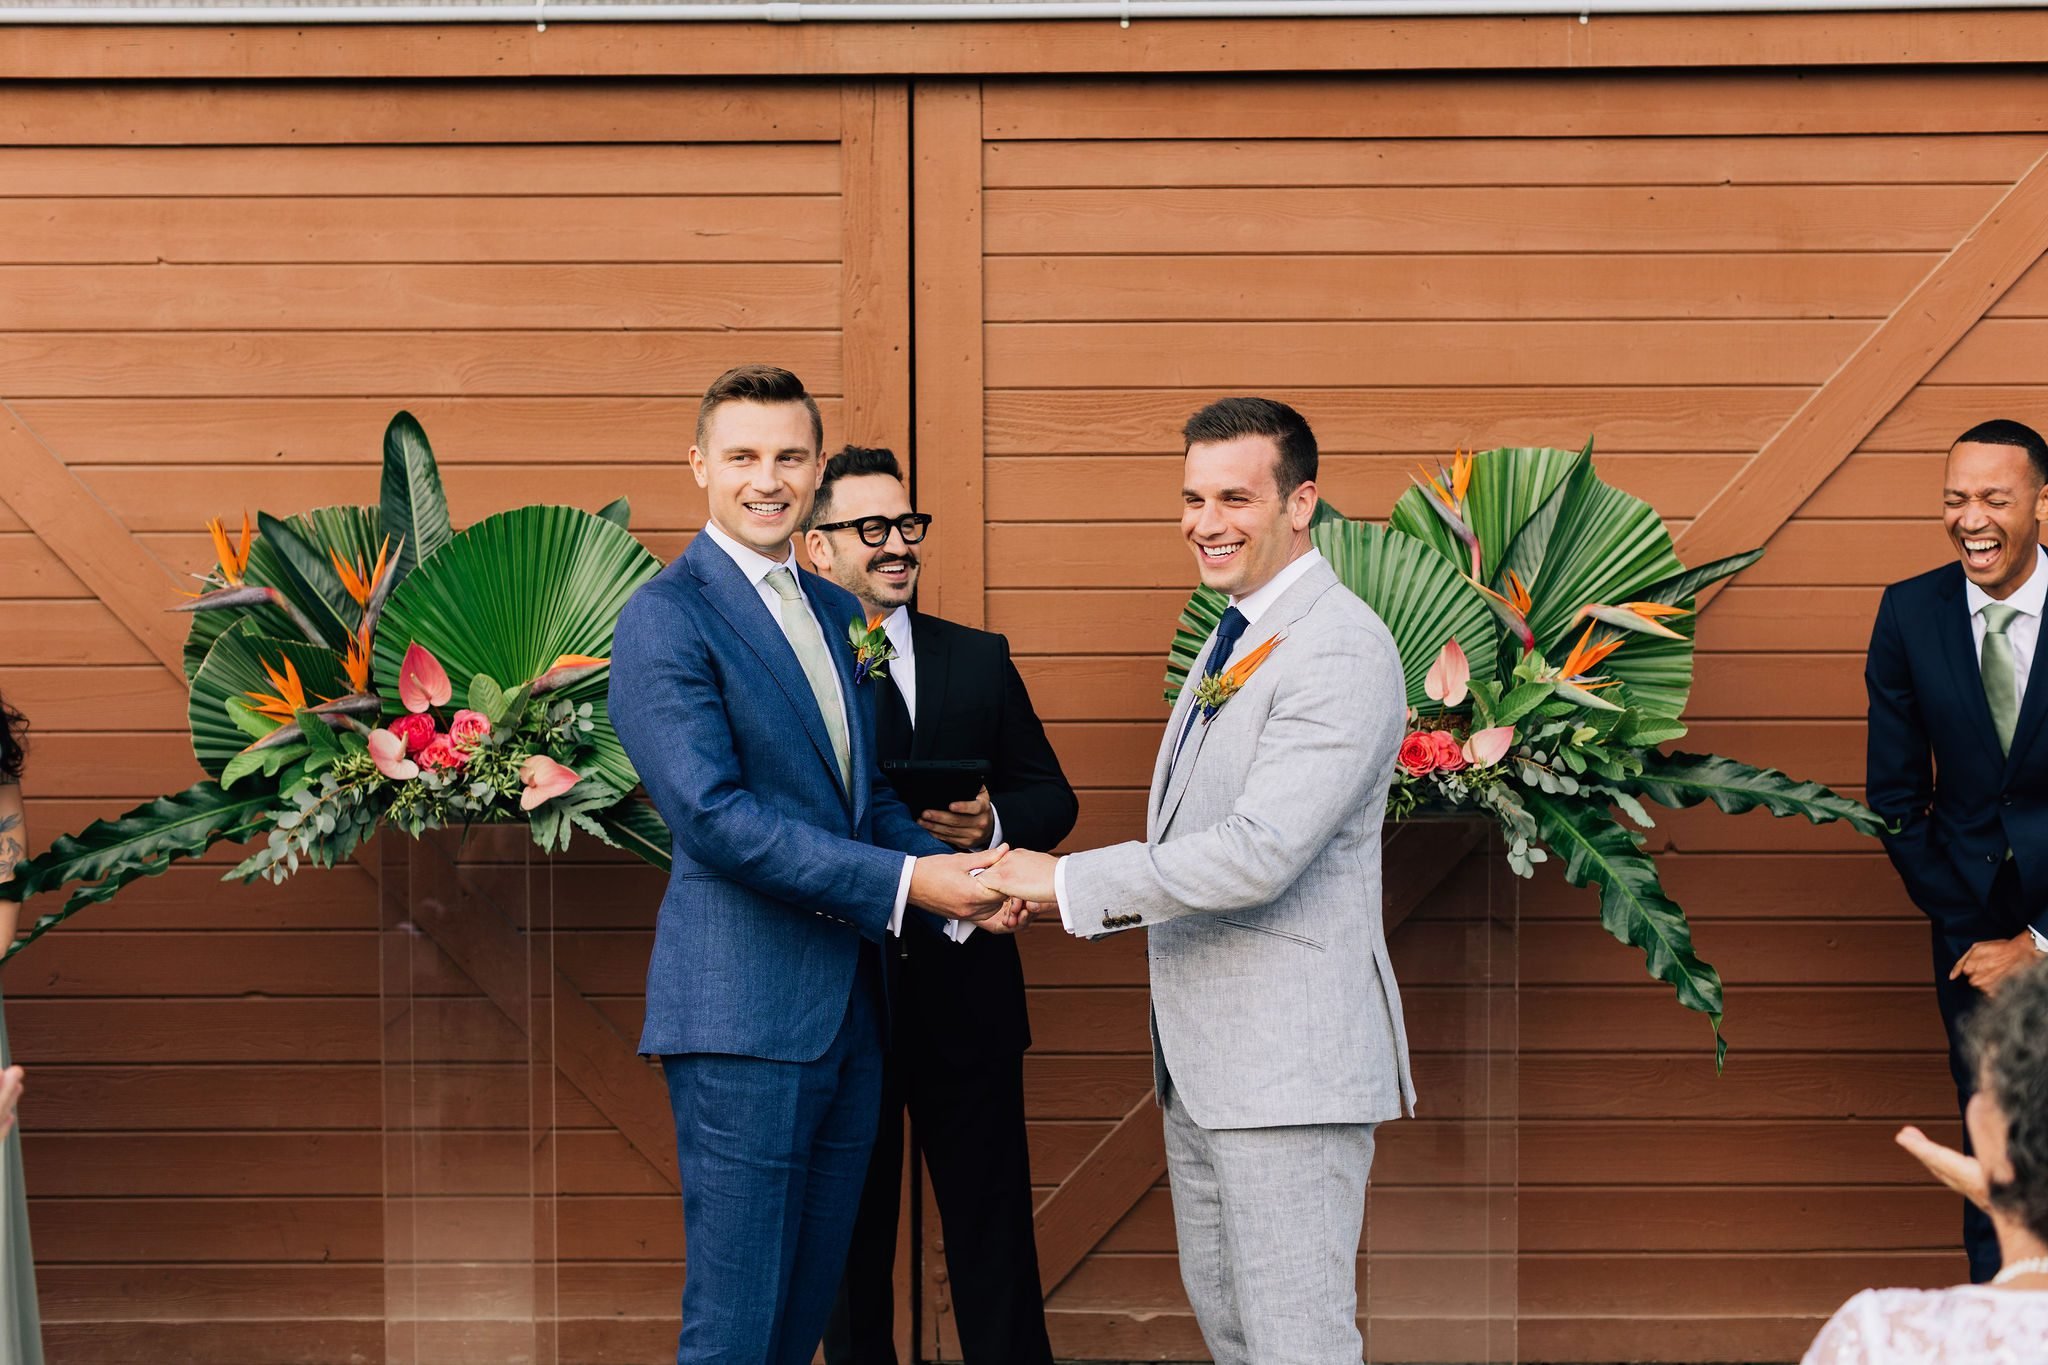 men's grooming for gay wedding at ocean institute in dana point